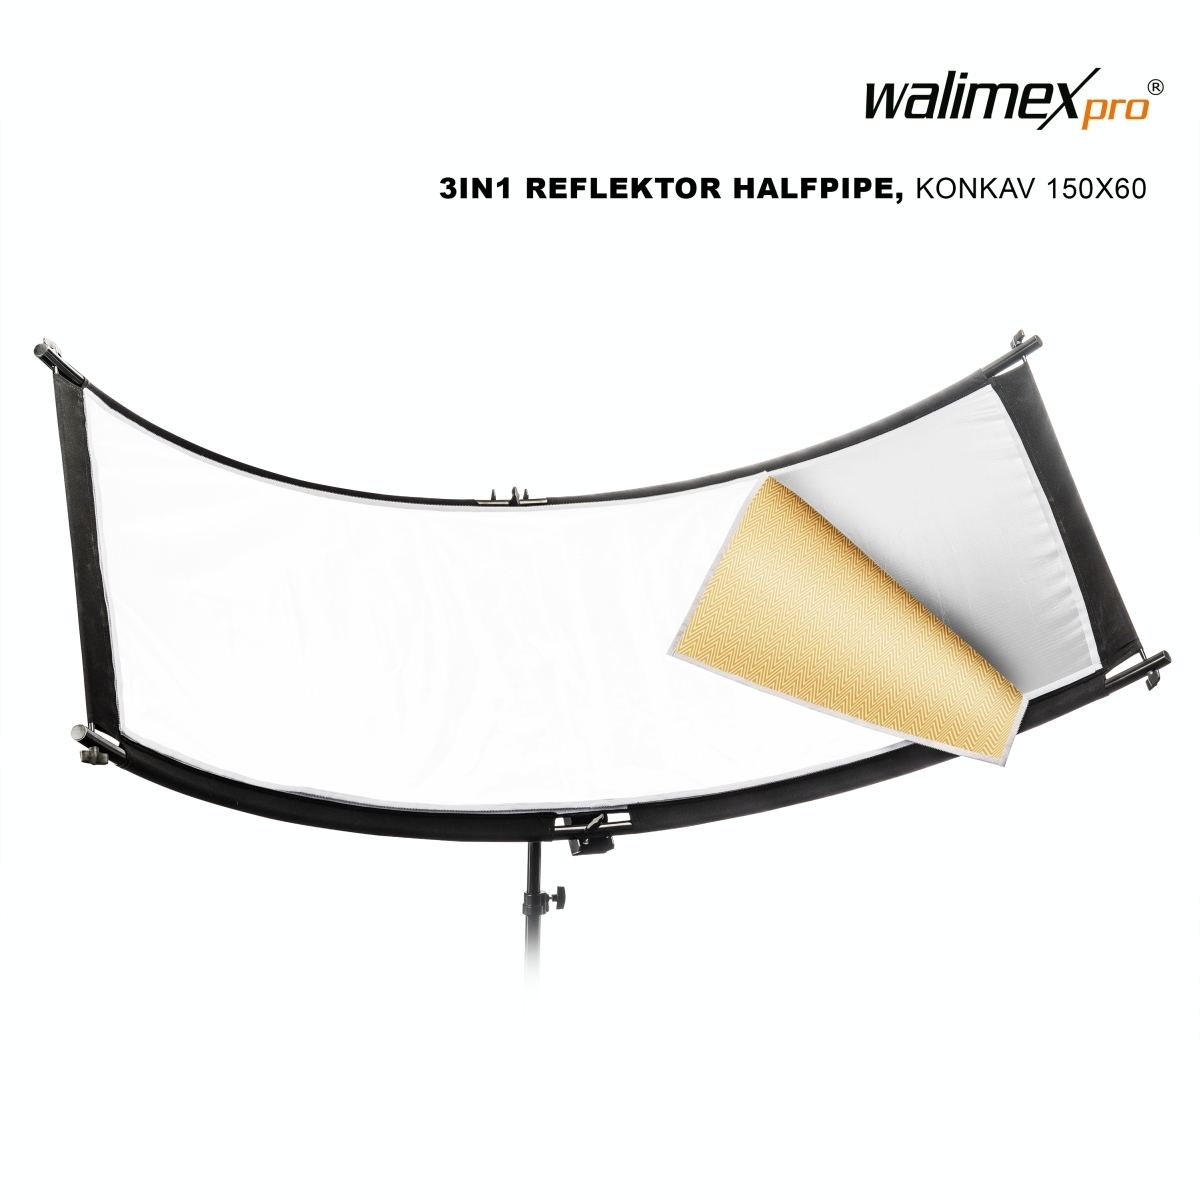 Walimex pro 3in1 Reflektor Halfpipe konkav 150x60 